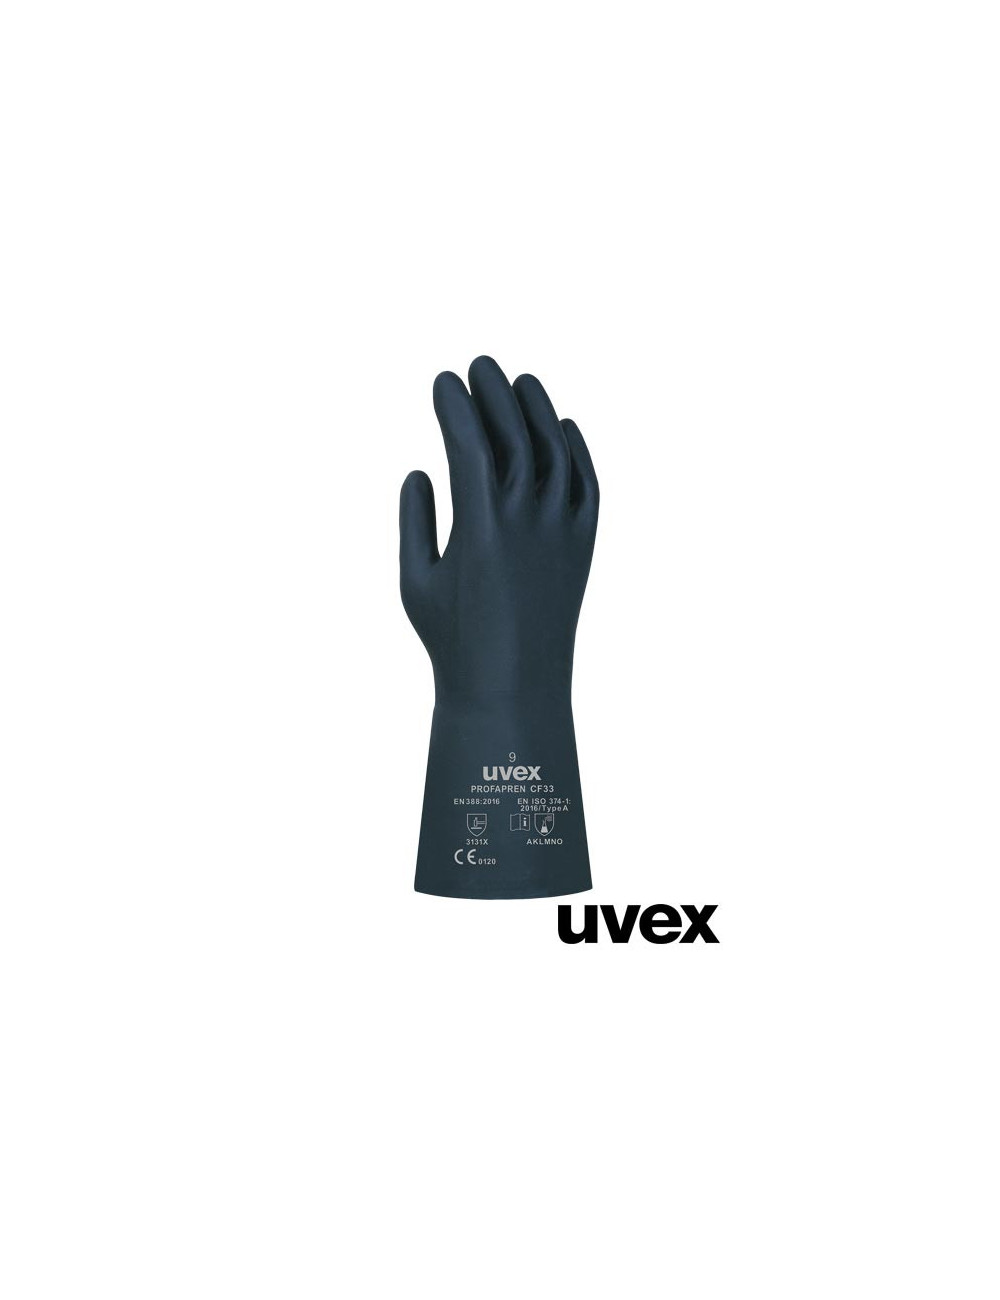 Protective gloves b black Uvex Ruvex-fapren